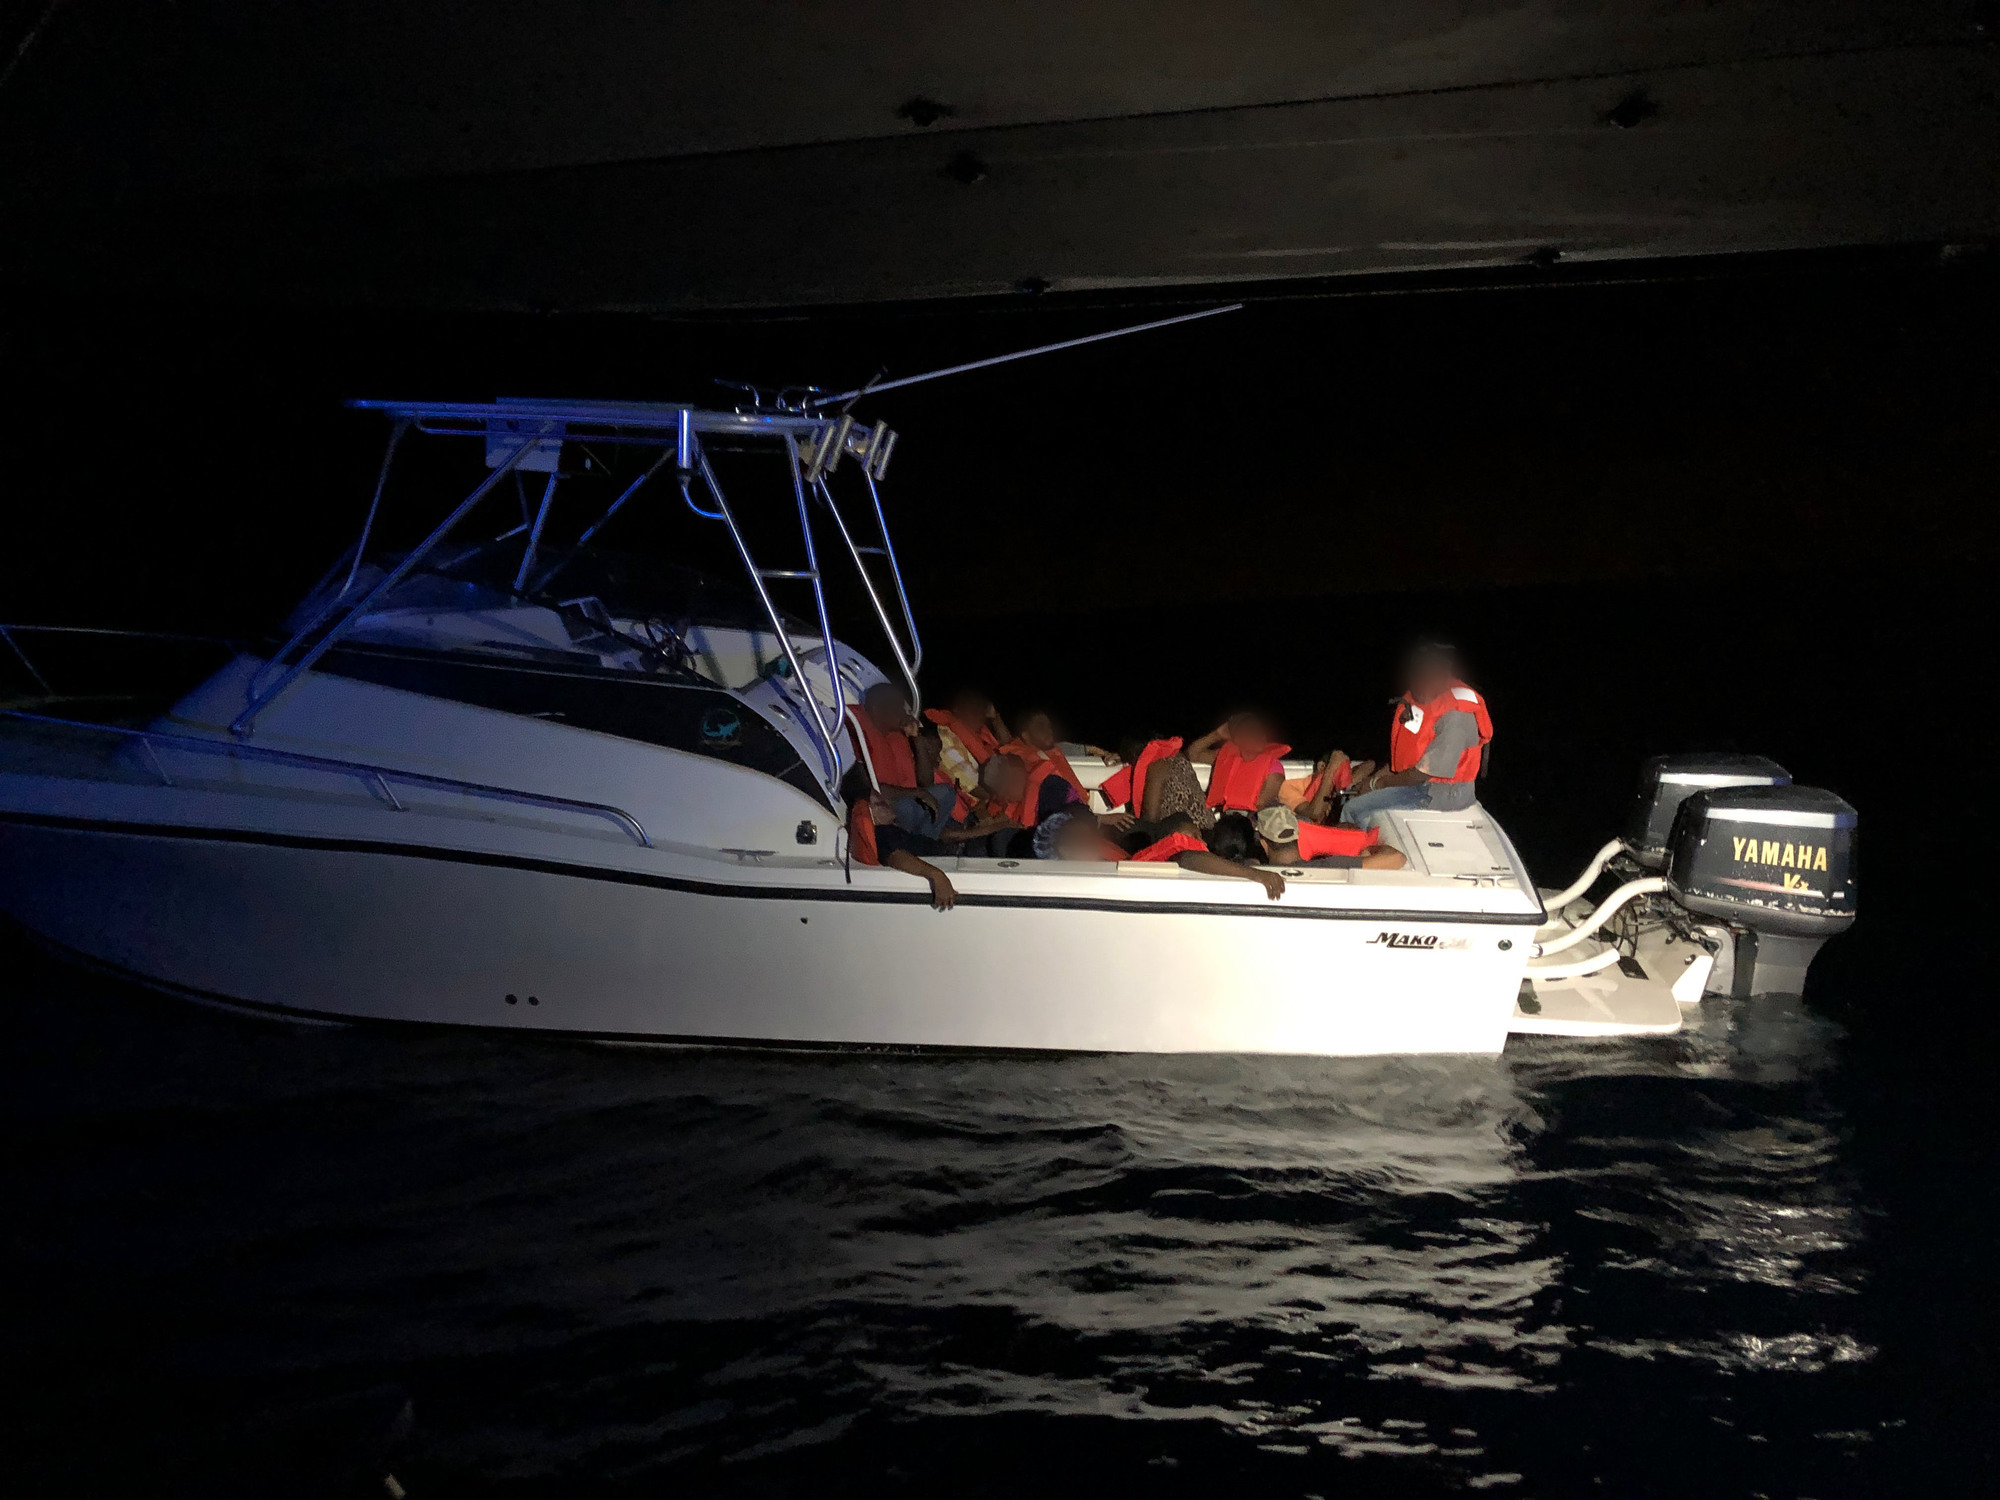 Coast Guard interdicts 14 Haitian migrants and 2 suspected smugglers 12 miles east of Boynton Beach